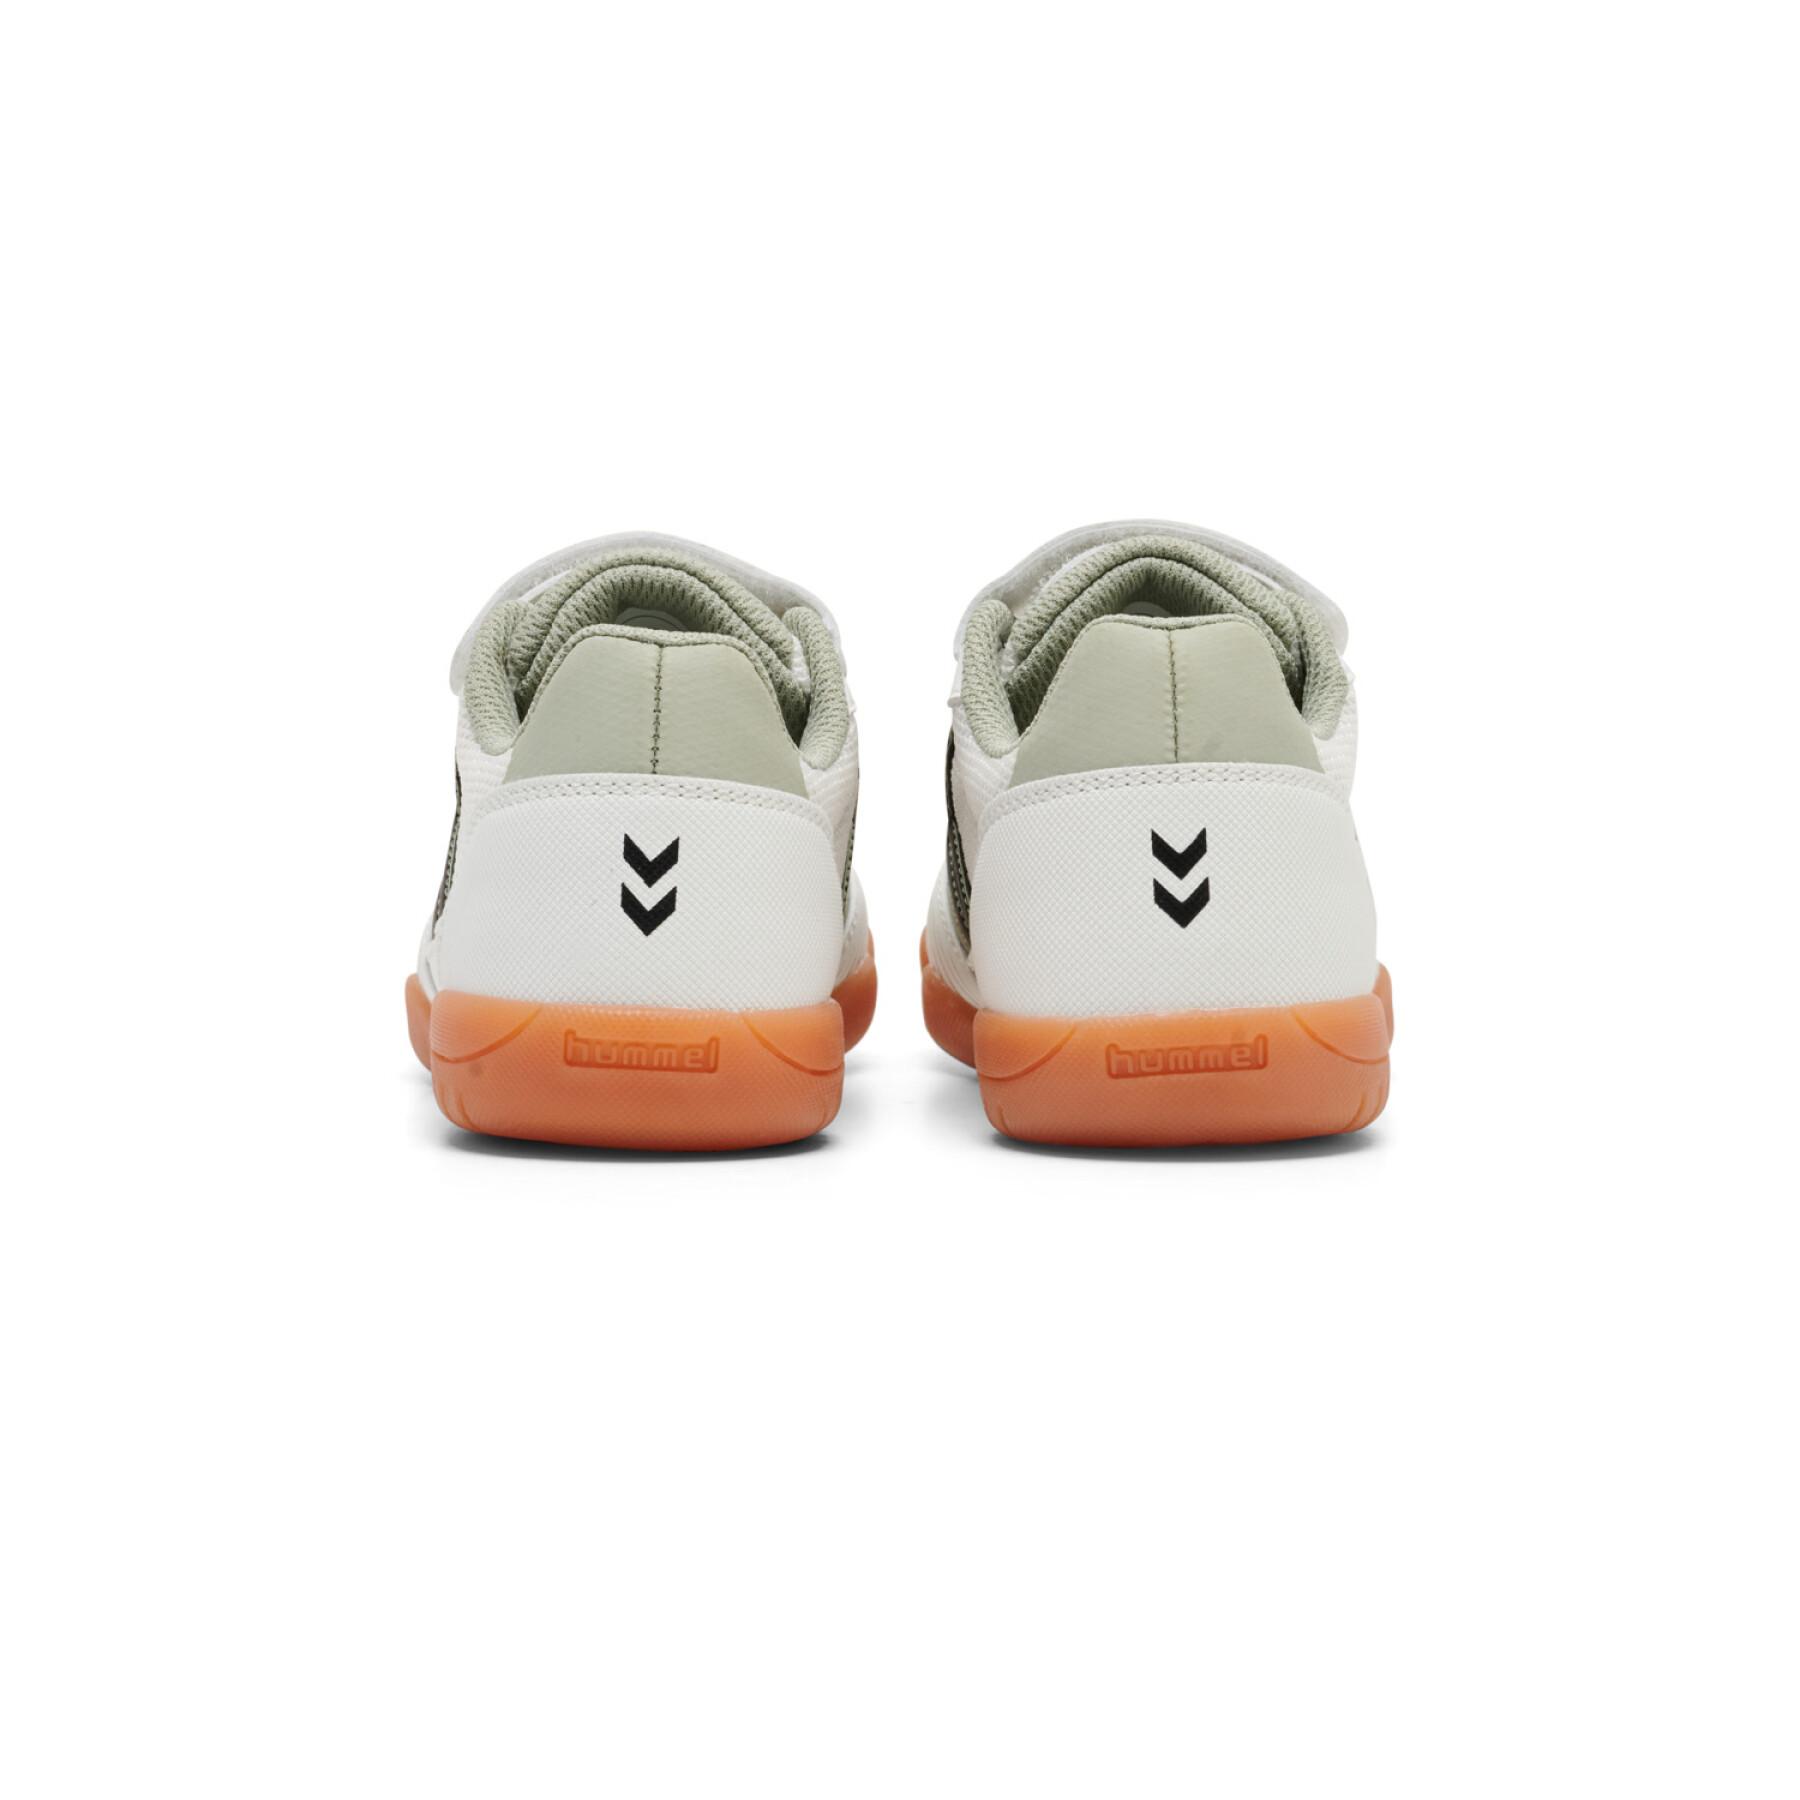 Sneakers Hummel Aeroteam III VC